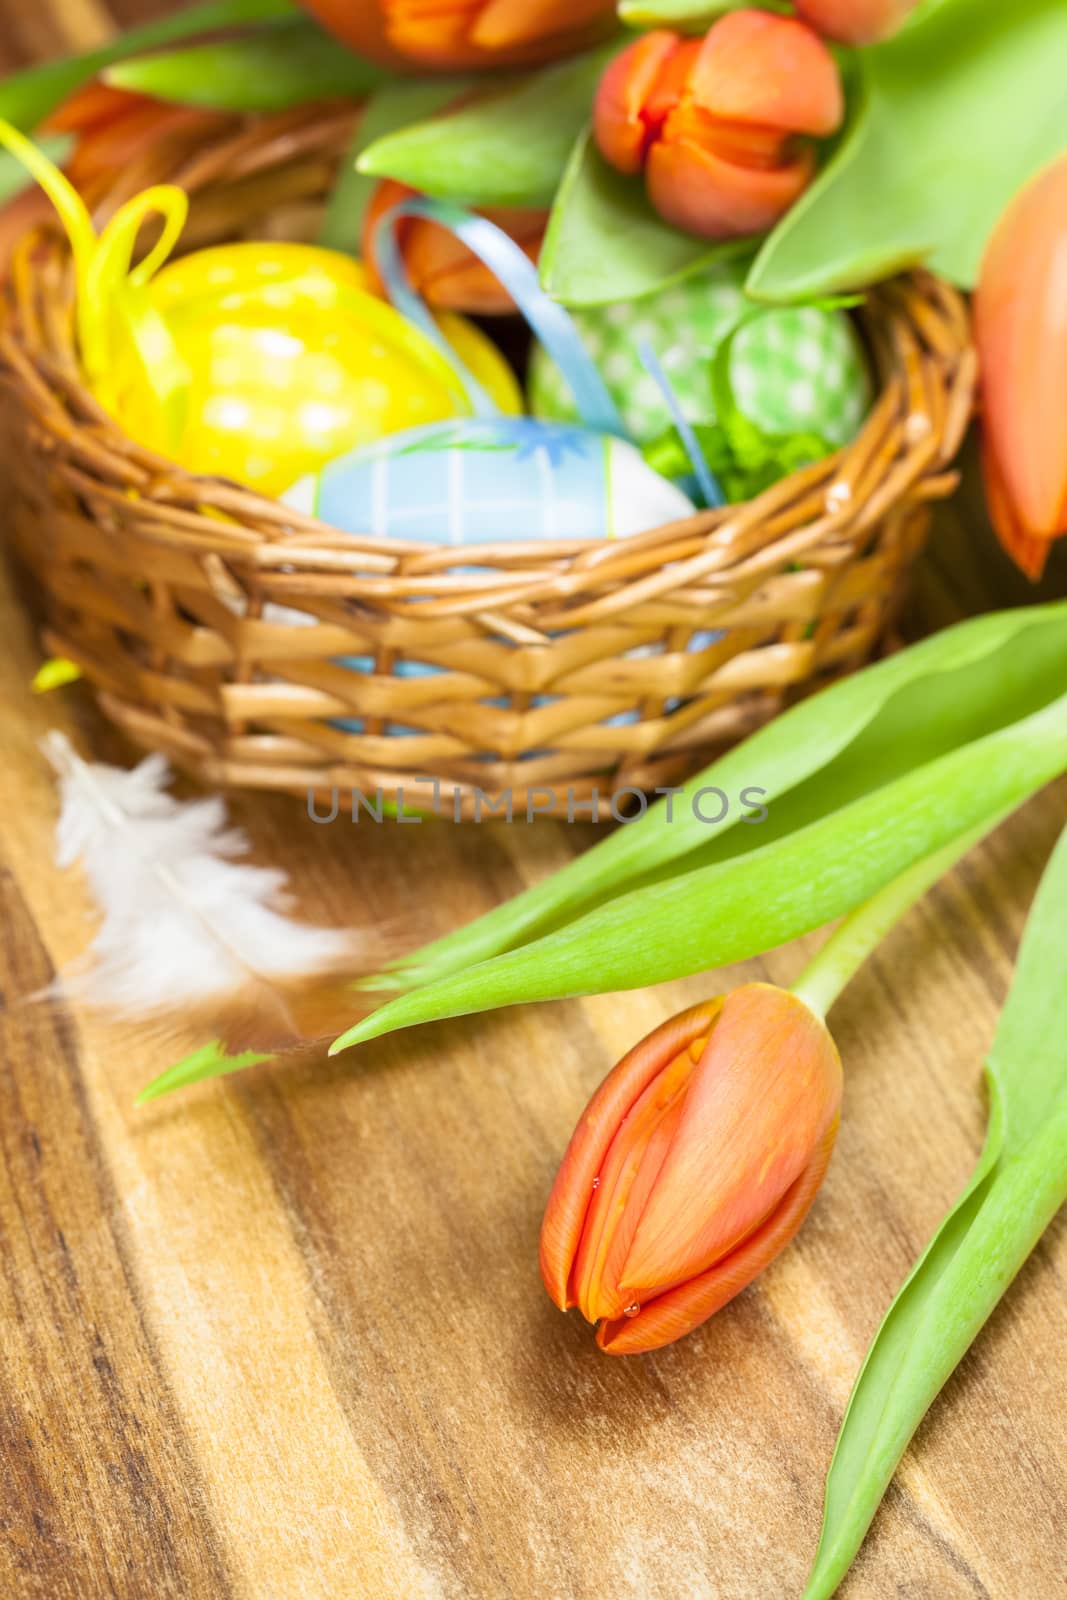 Easter eggs in basket and orange tulip by Slast20